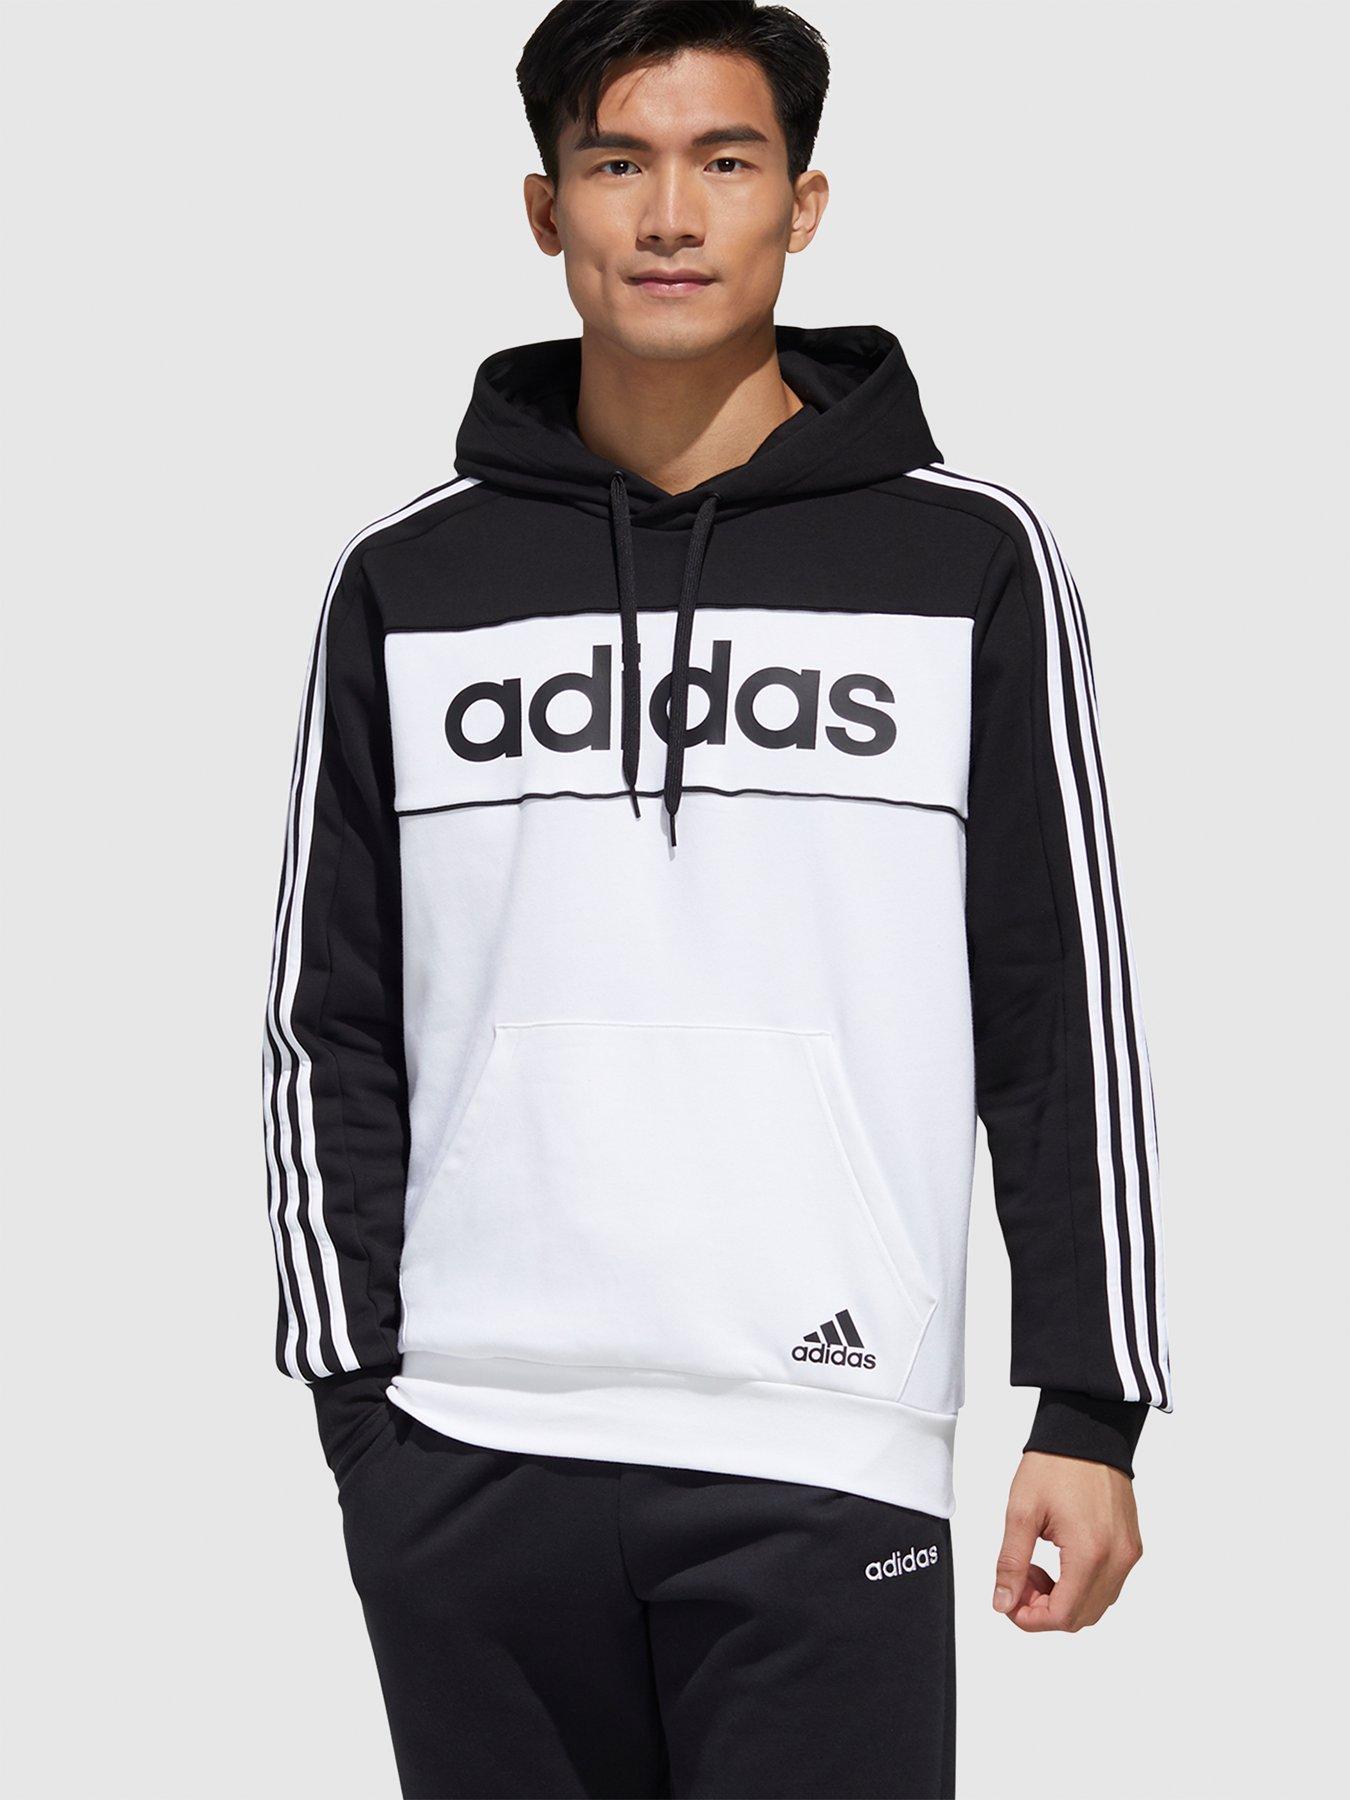 adidas black and white hoodie mens